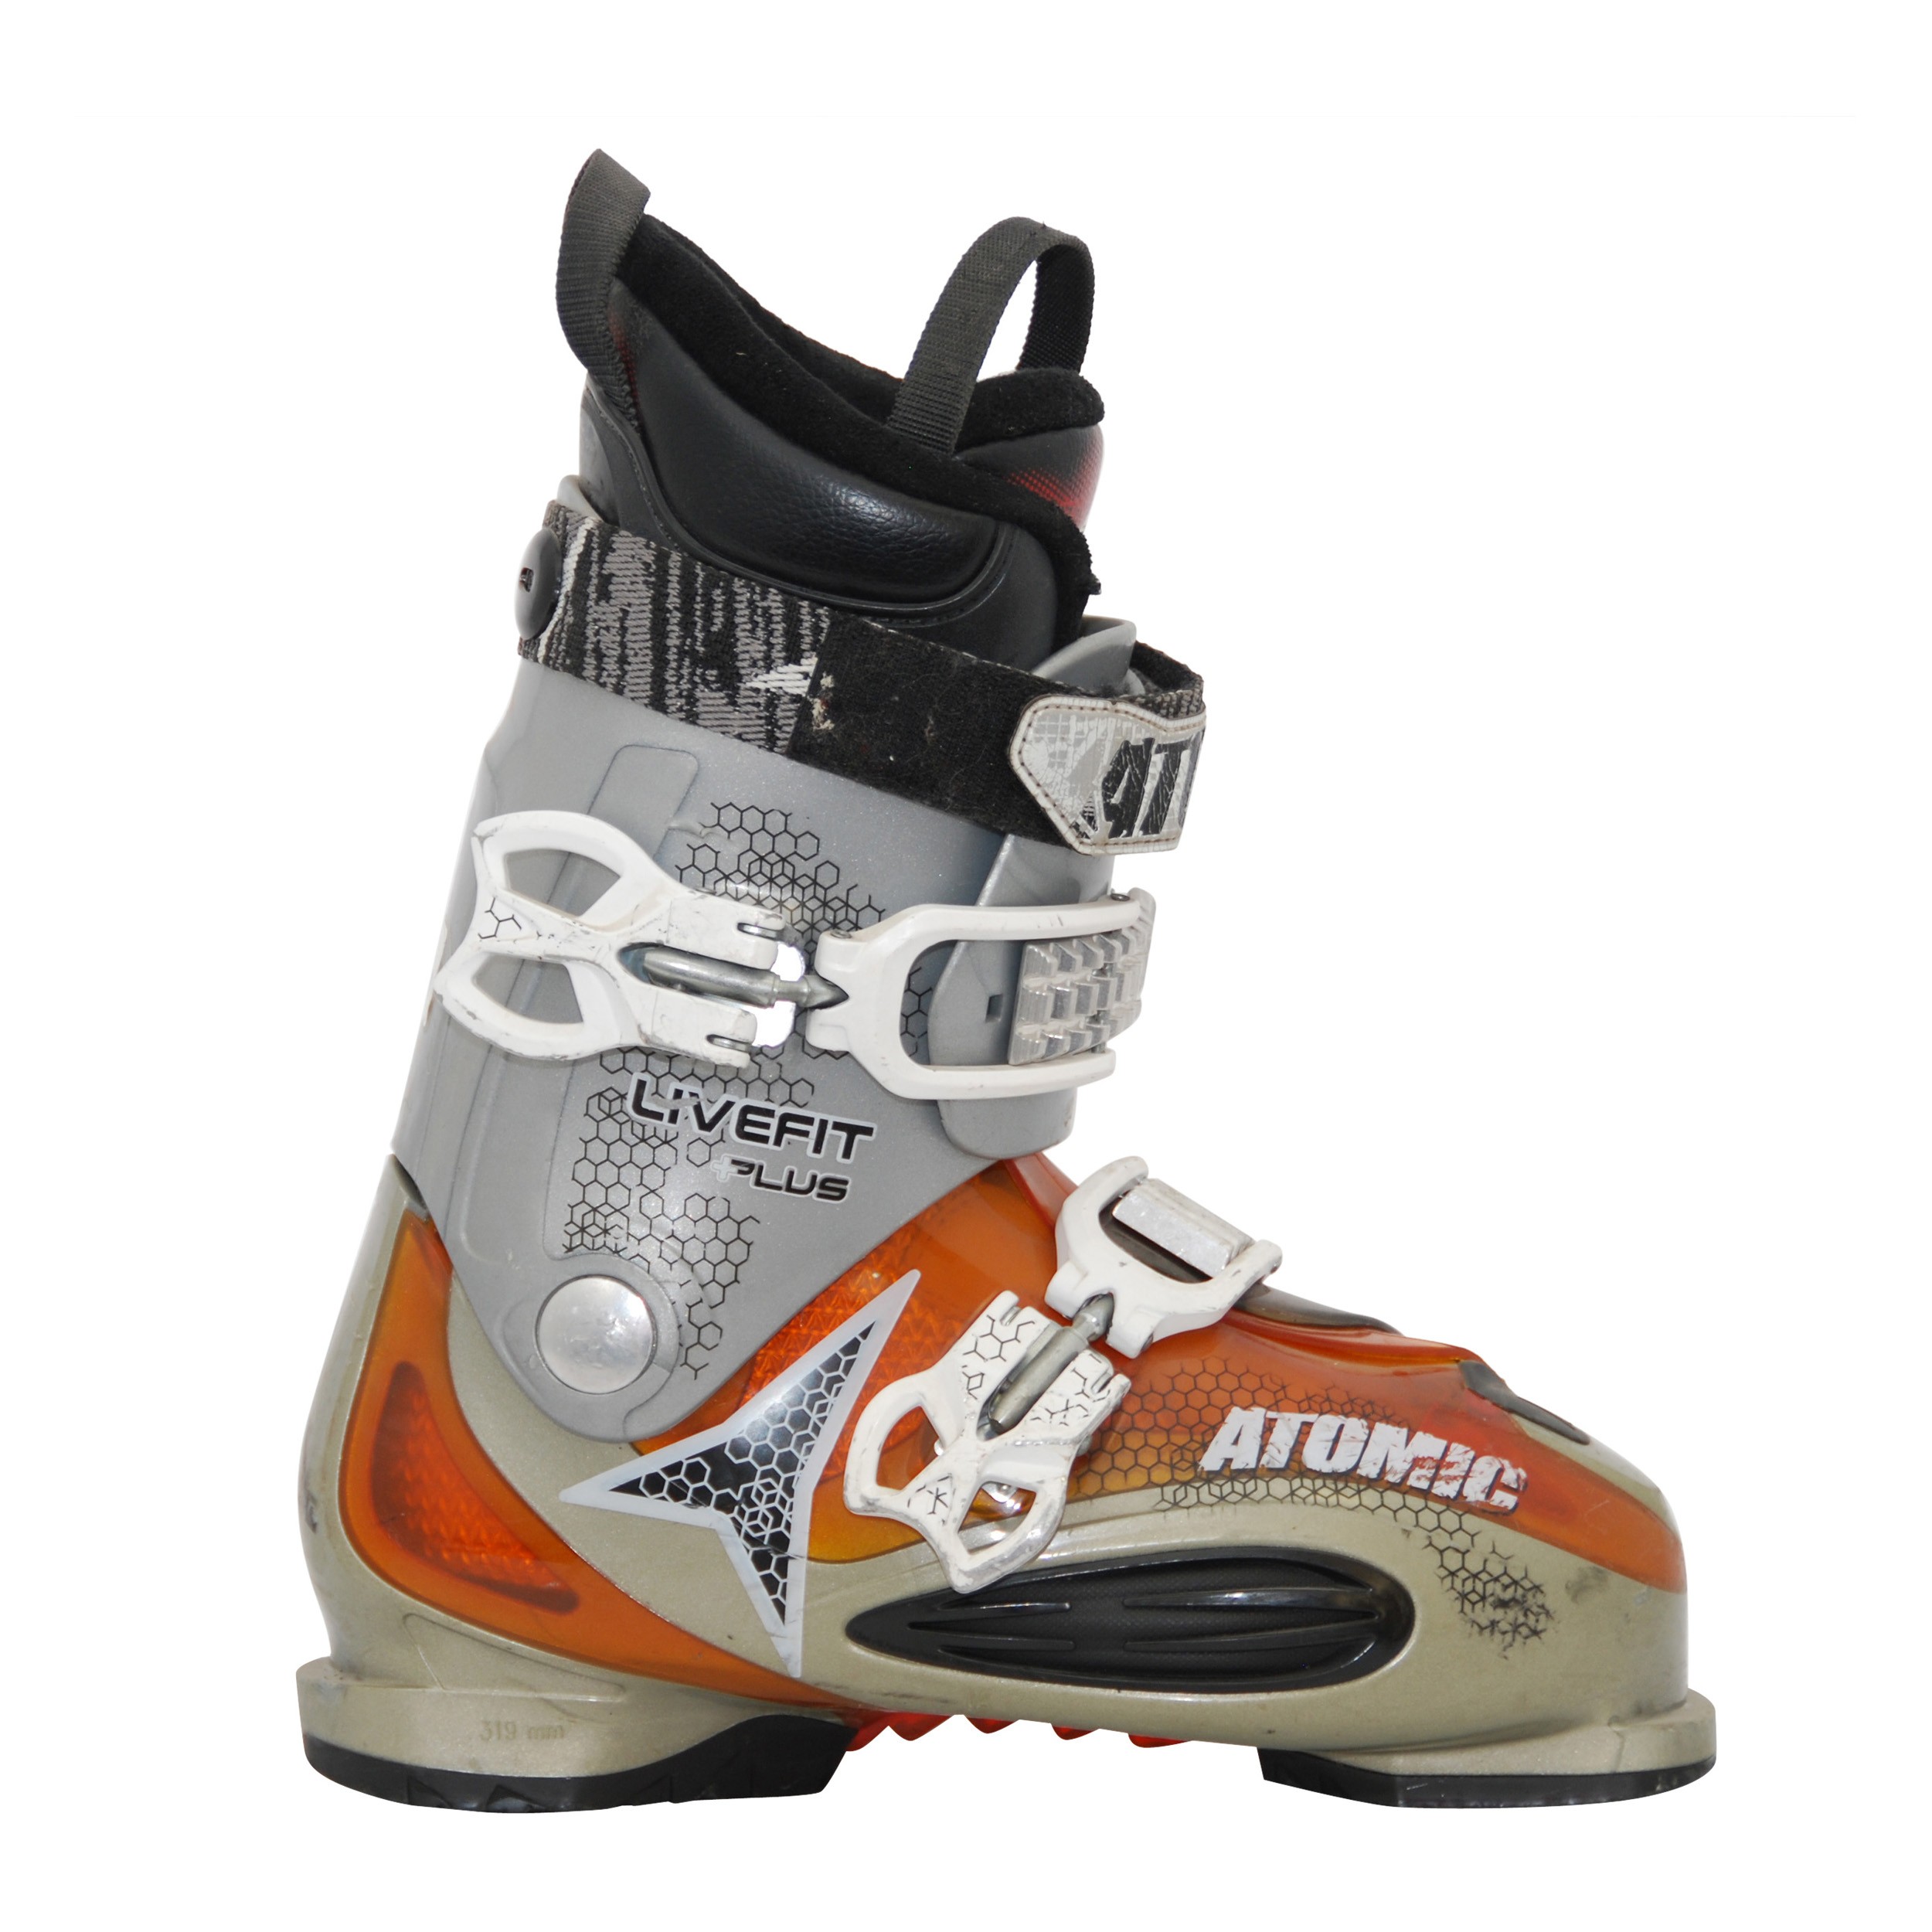 atomic live fit ski boots